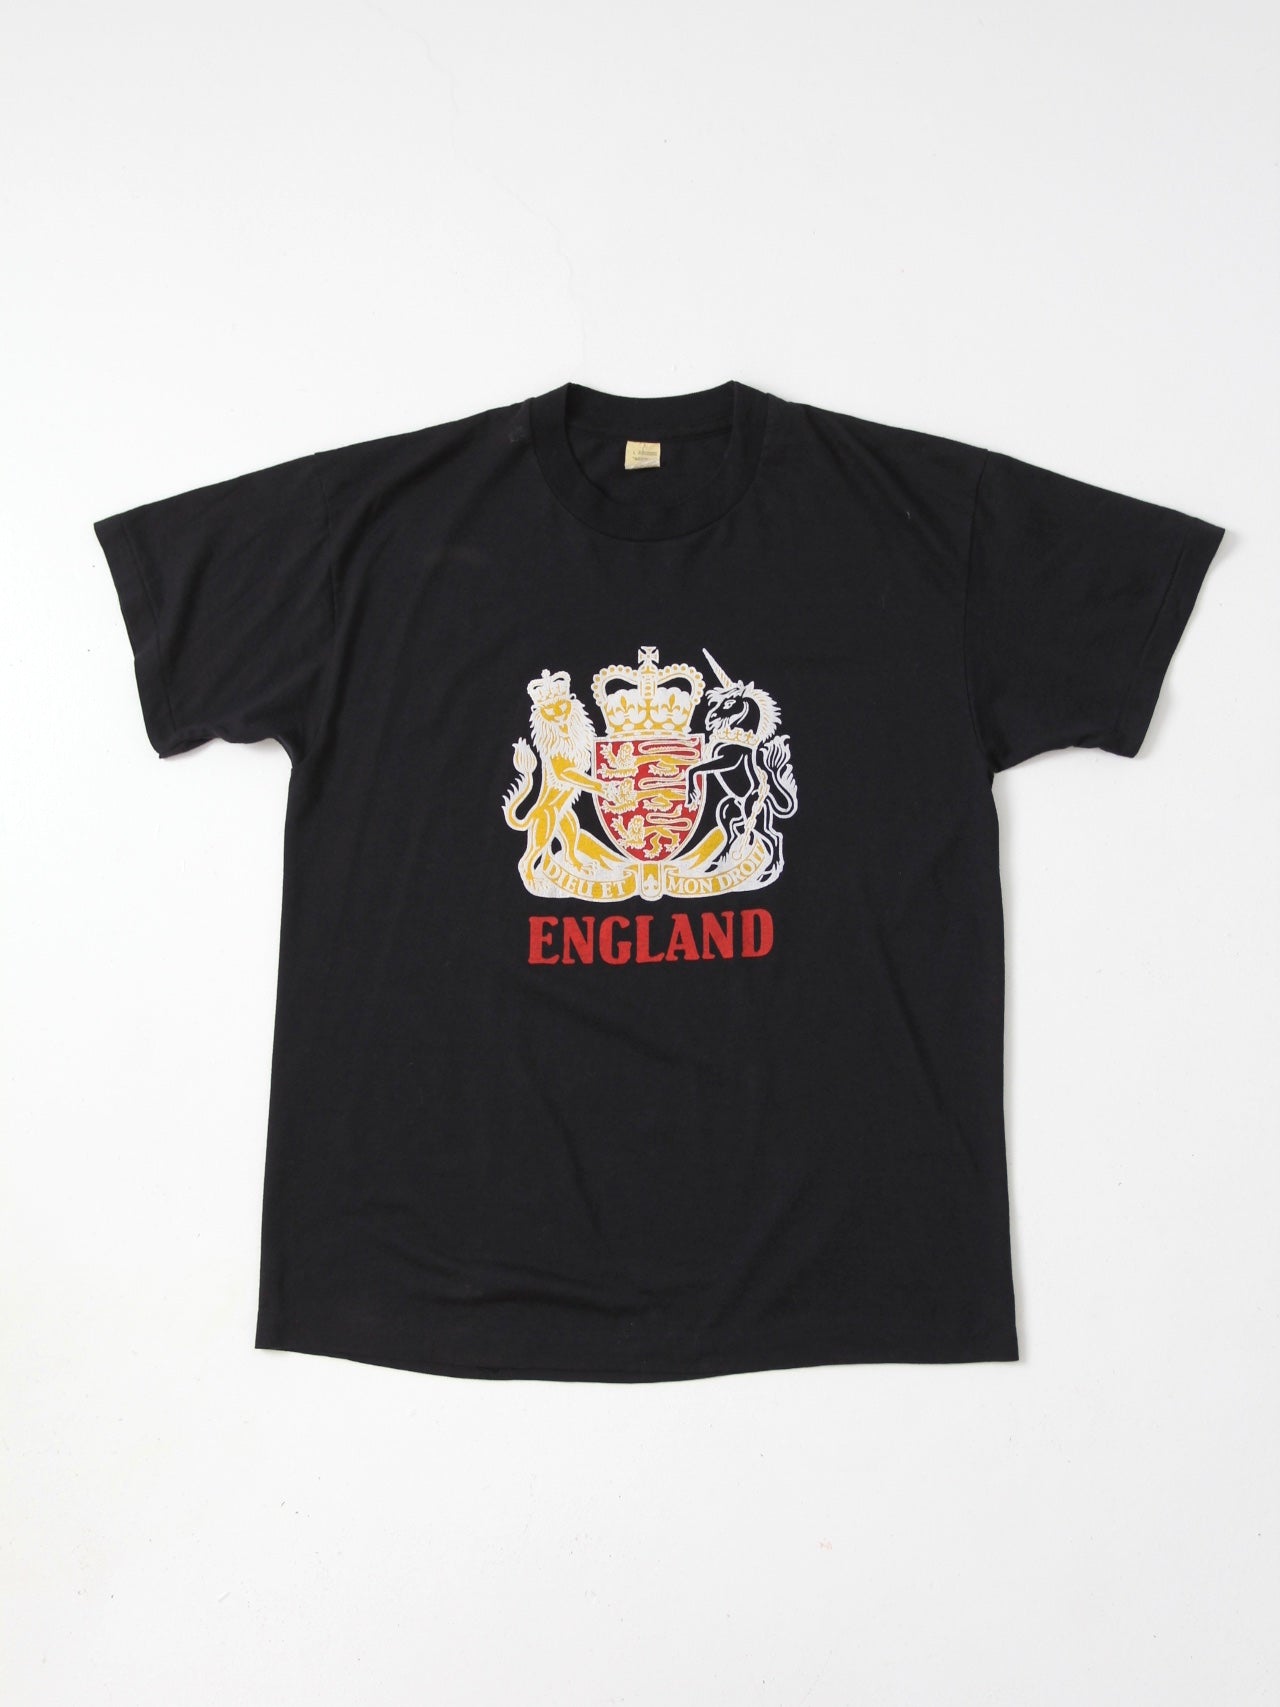 vintage England graphic t-shirt